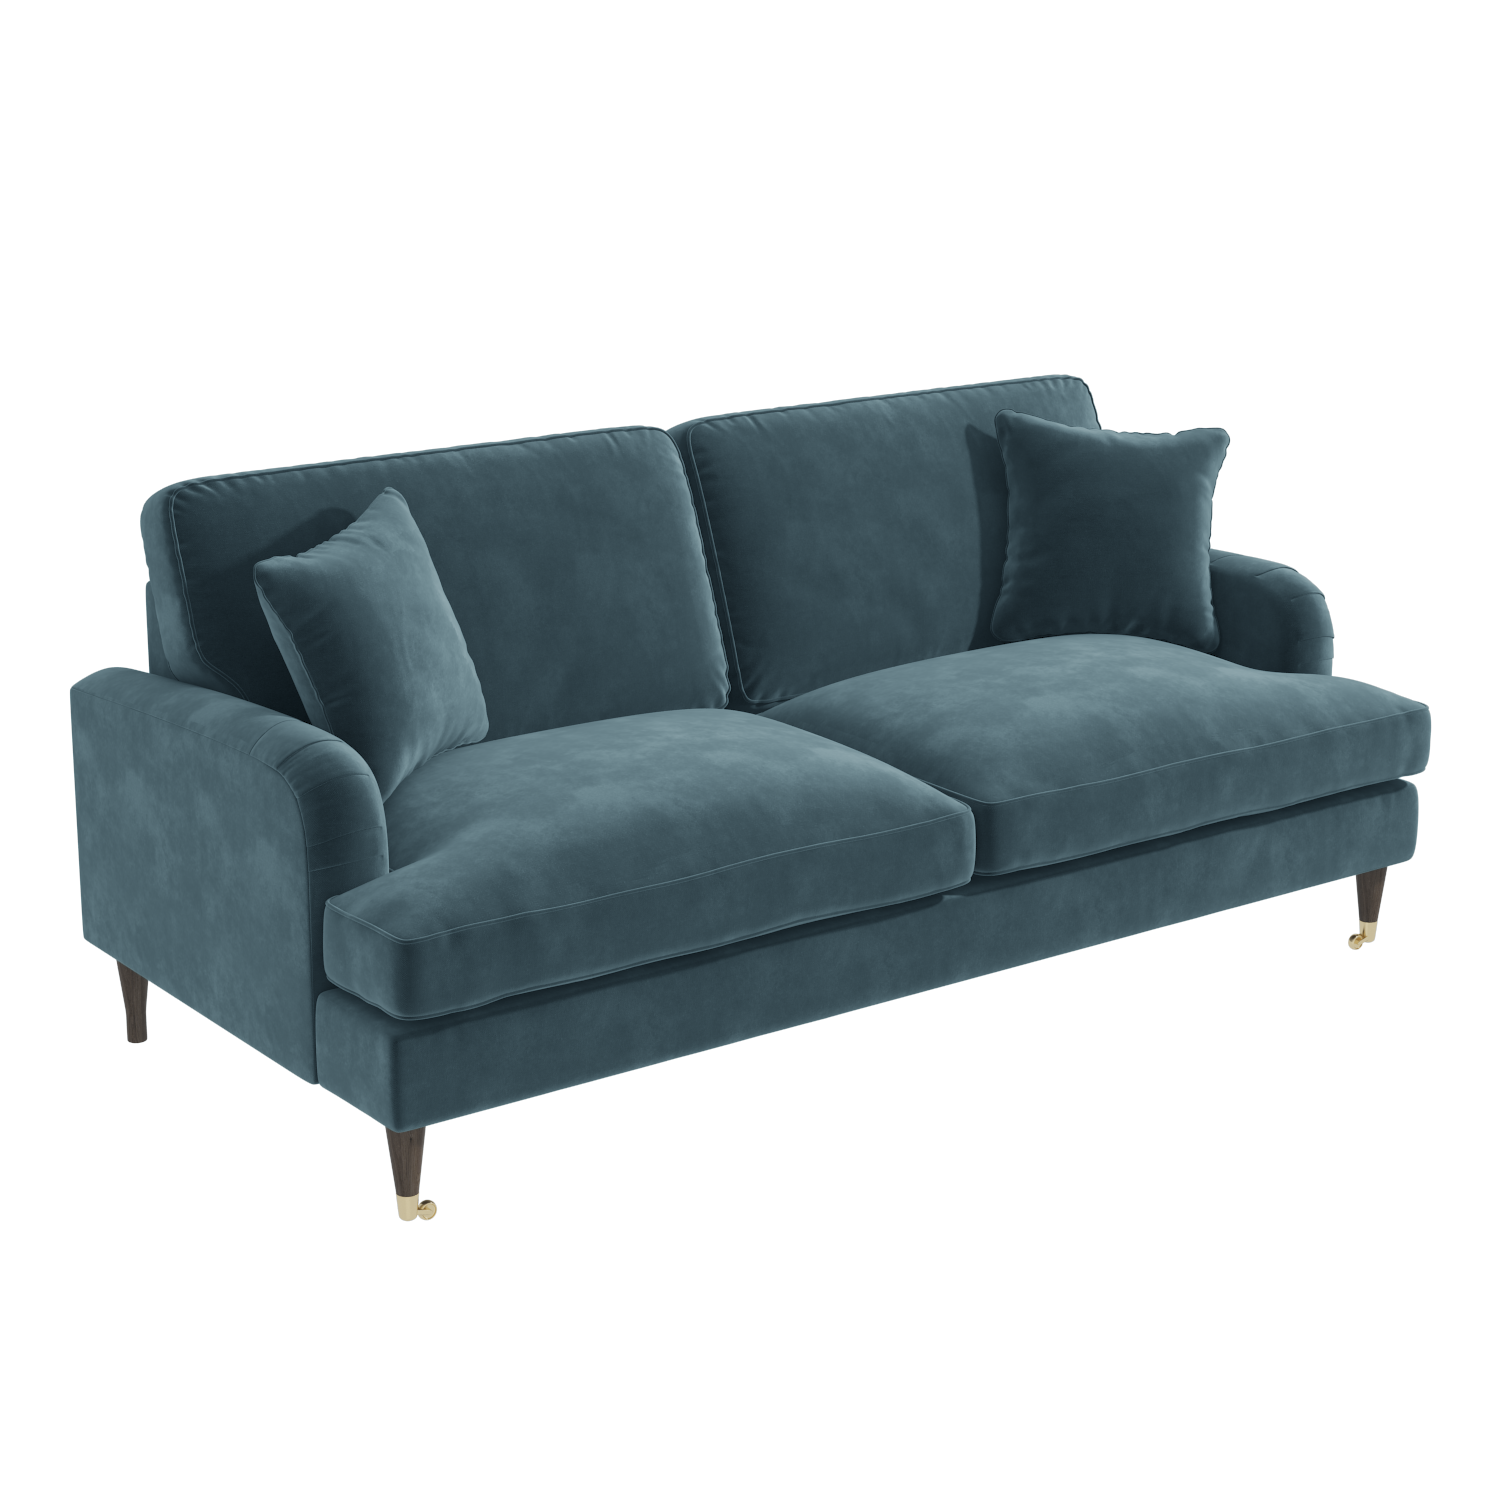 Read more about Blue velvet 3 seater sofa payton